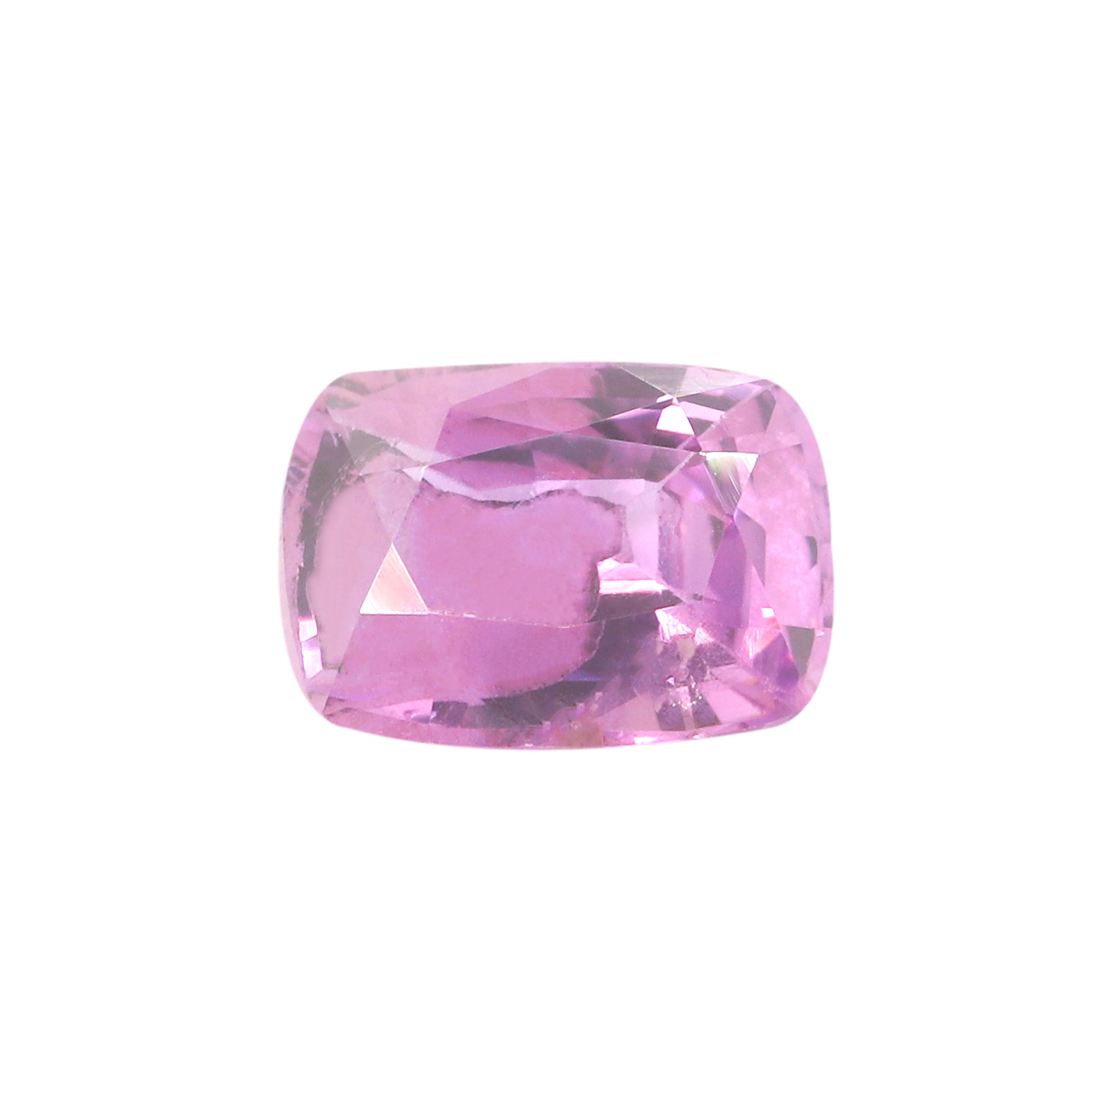 Pink Sapphire (1.67 carat) - Royal Gems